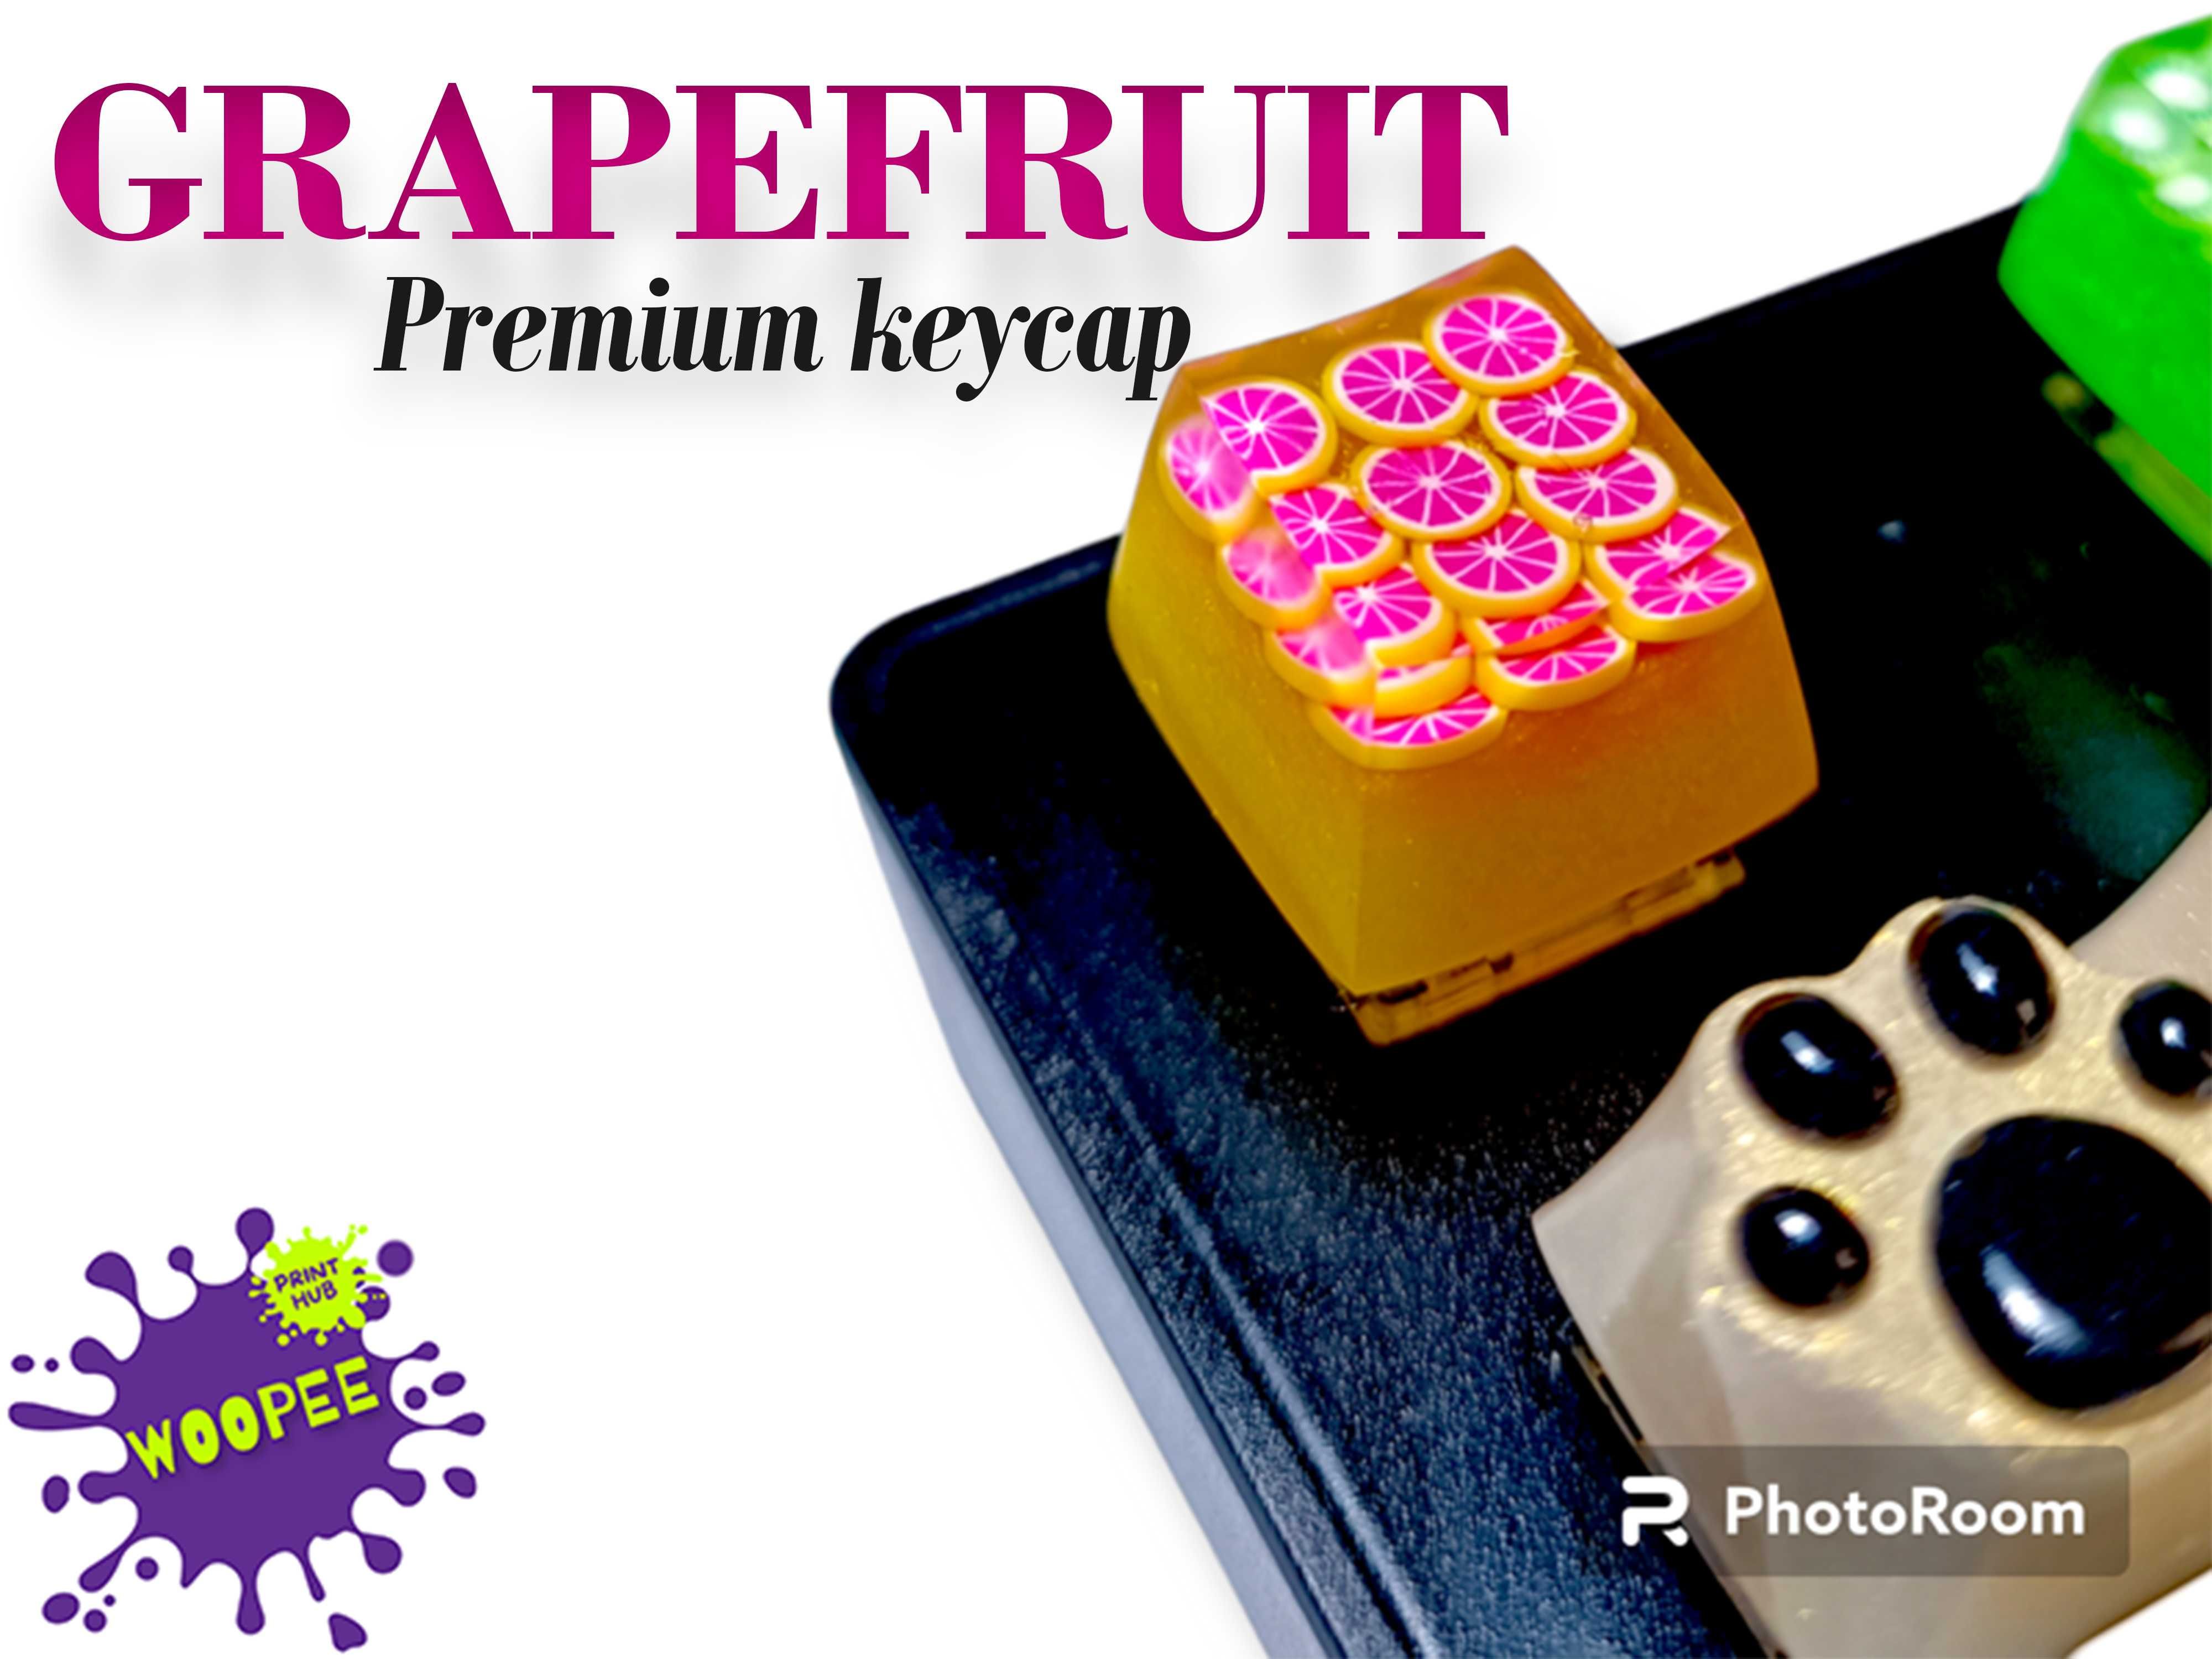 Капачки за механична клавиатура с плодове, Keycaps ОЕМ, CherryMX